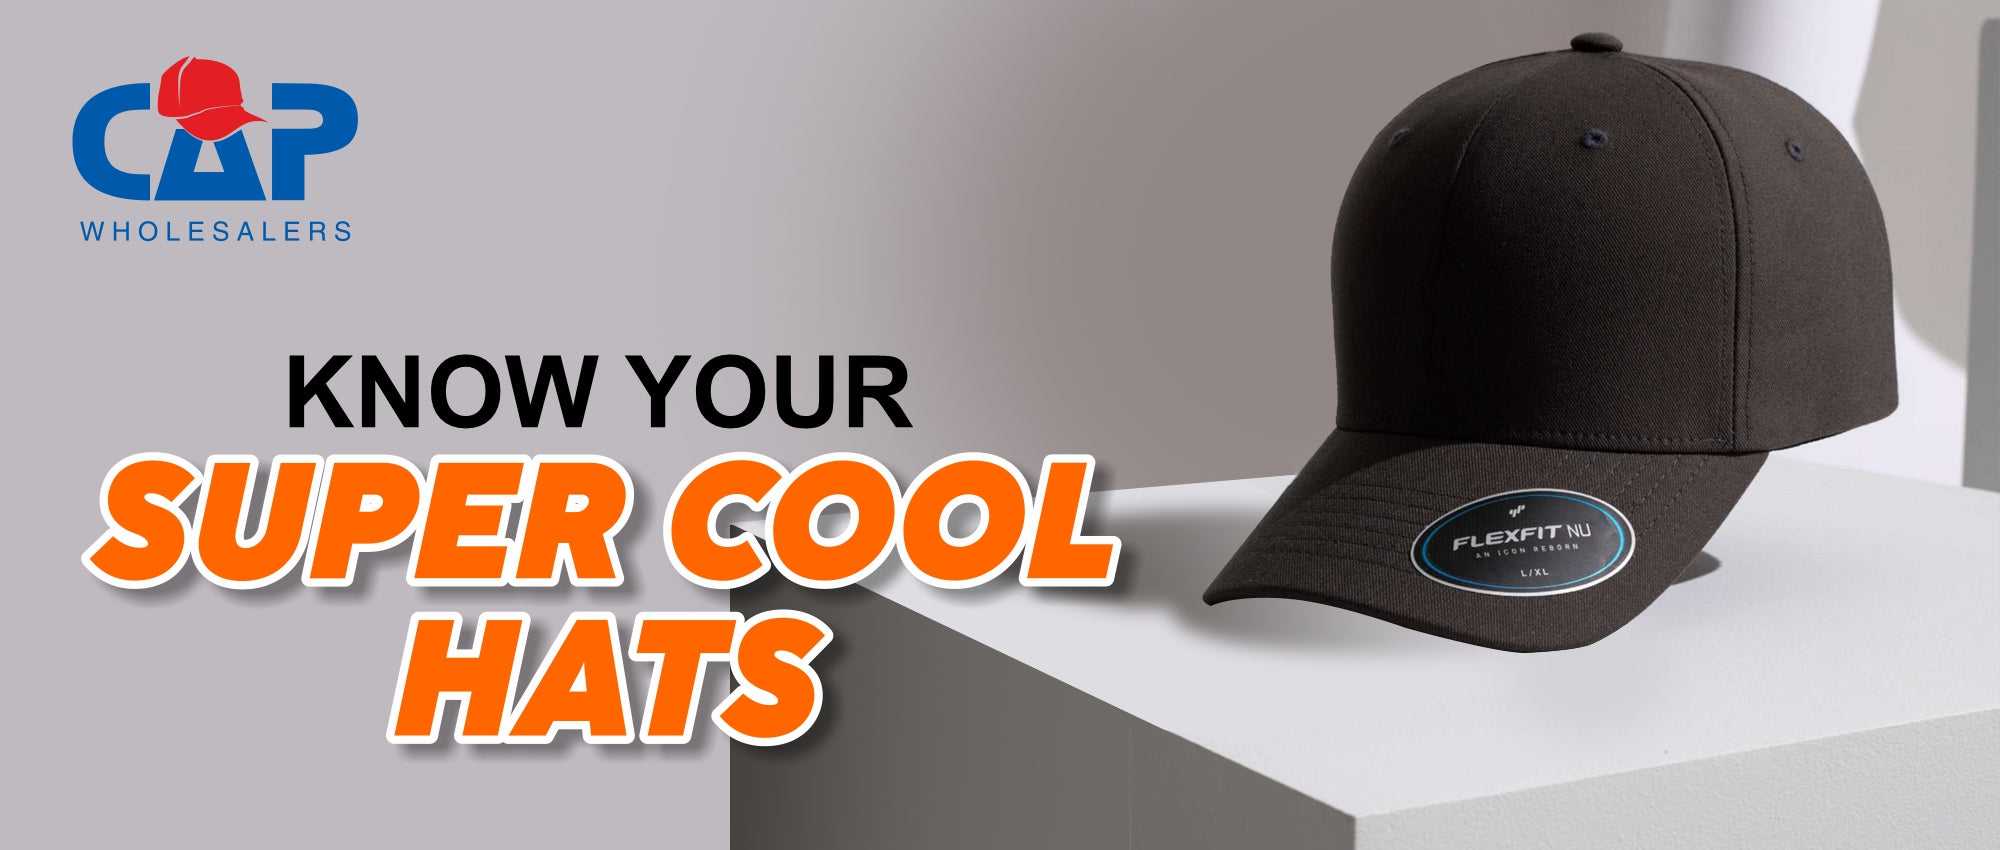 KNOW YOUR SUPER COOL HATS – Cap Wholesalers